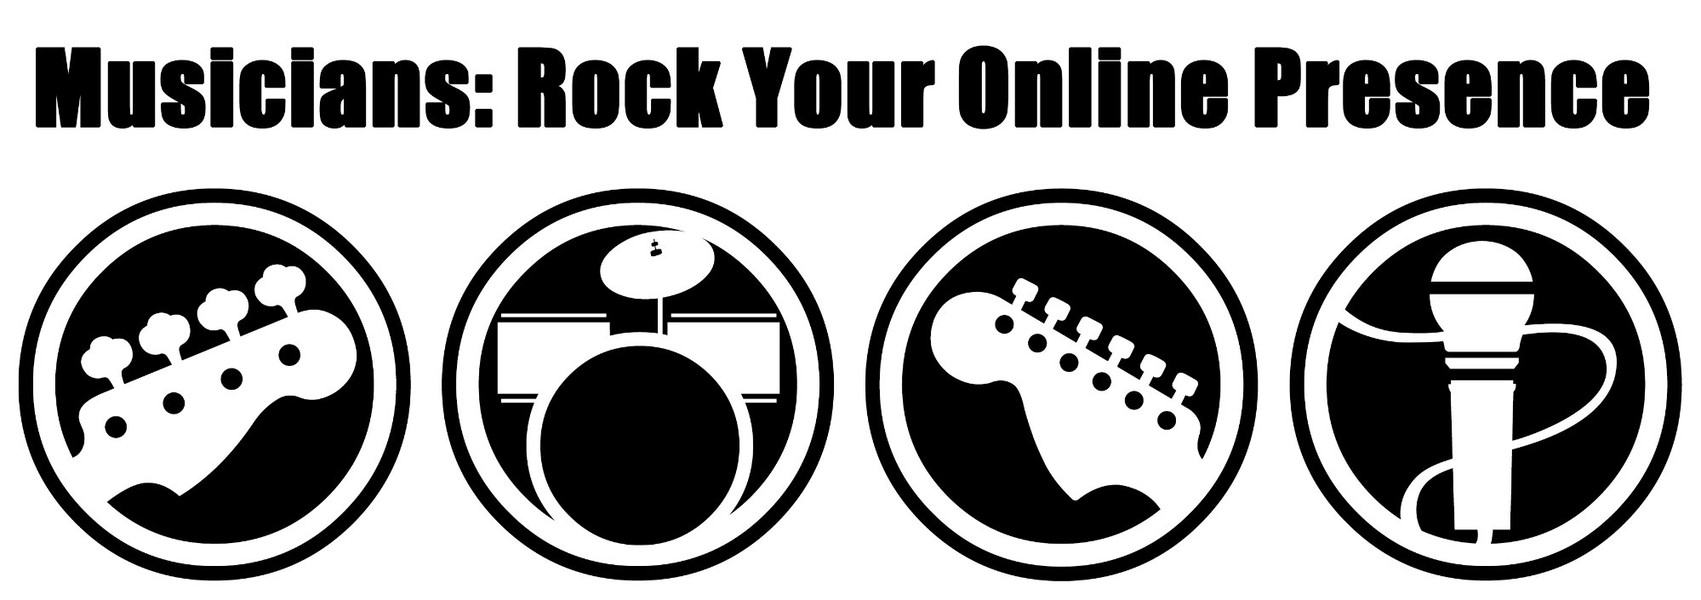 rock your online presence